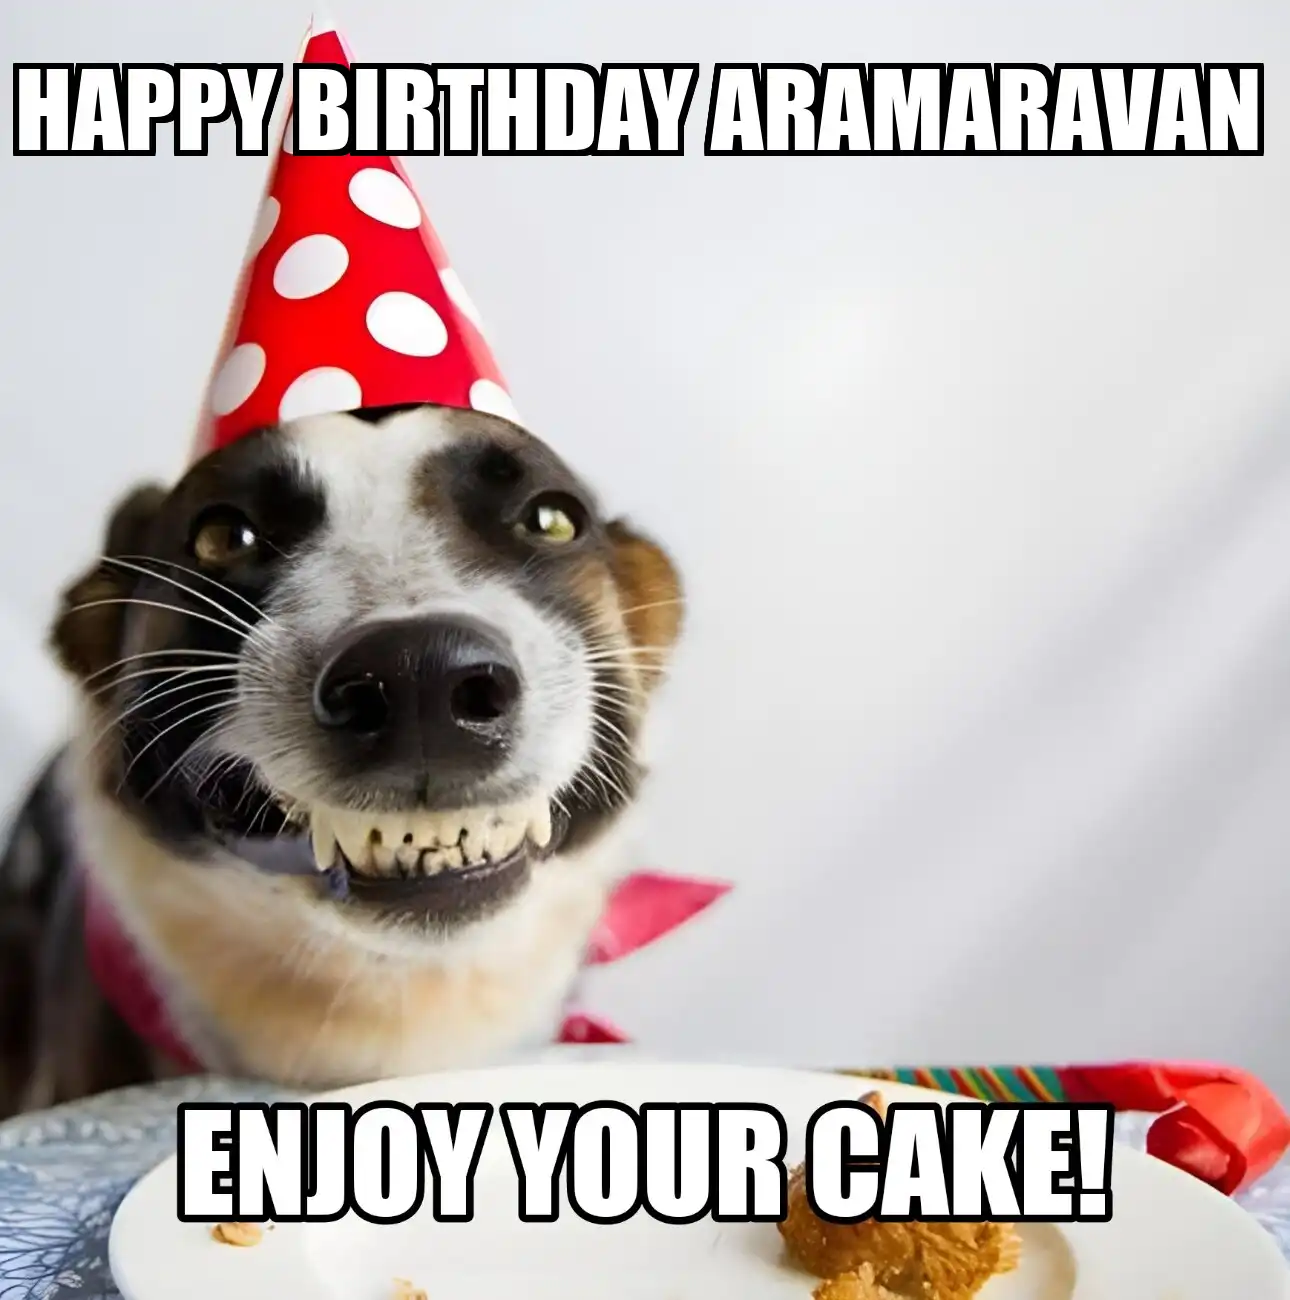 Happy Birthday Aramaravan Enjoy Your Cake Dog Meme